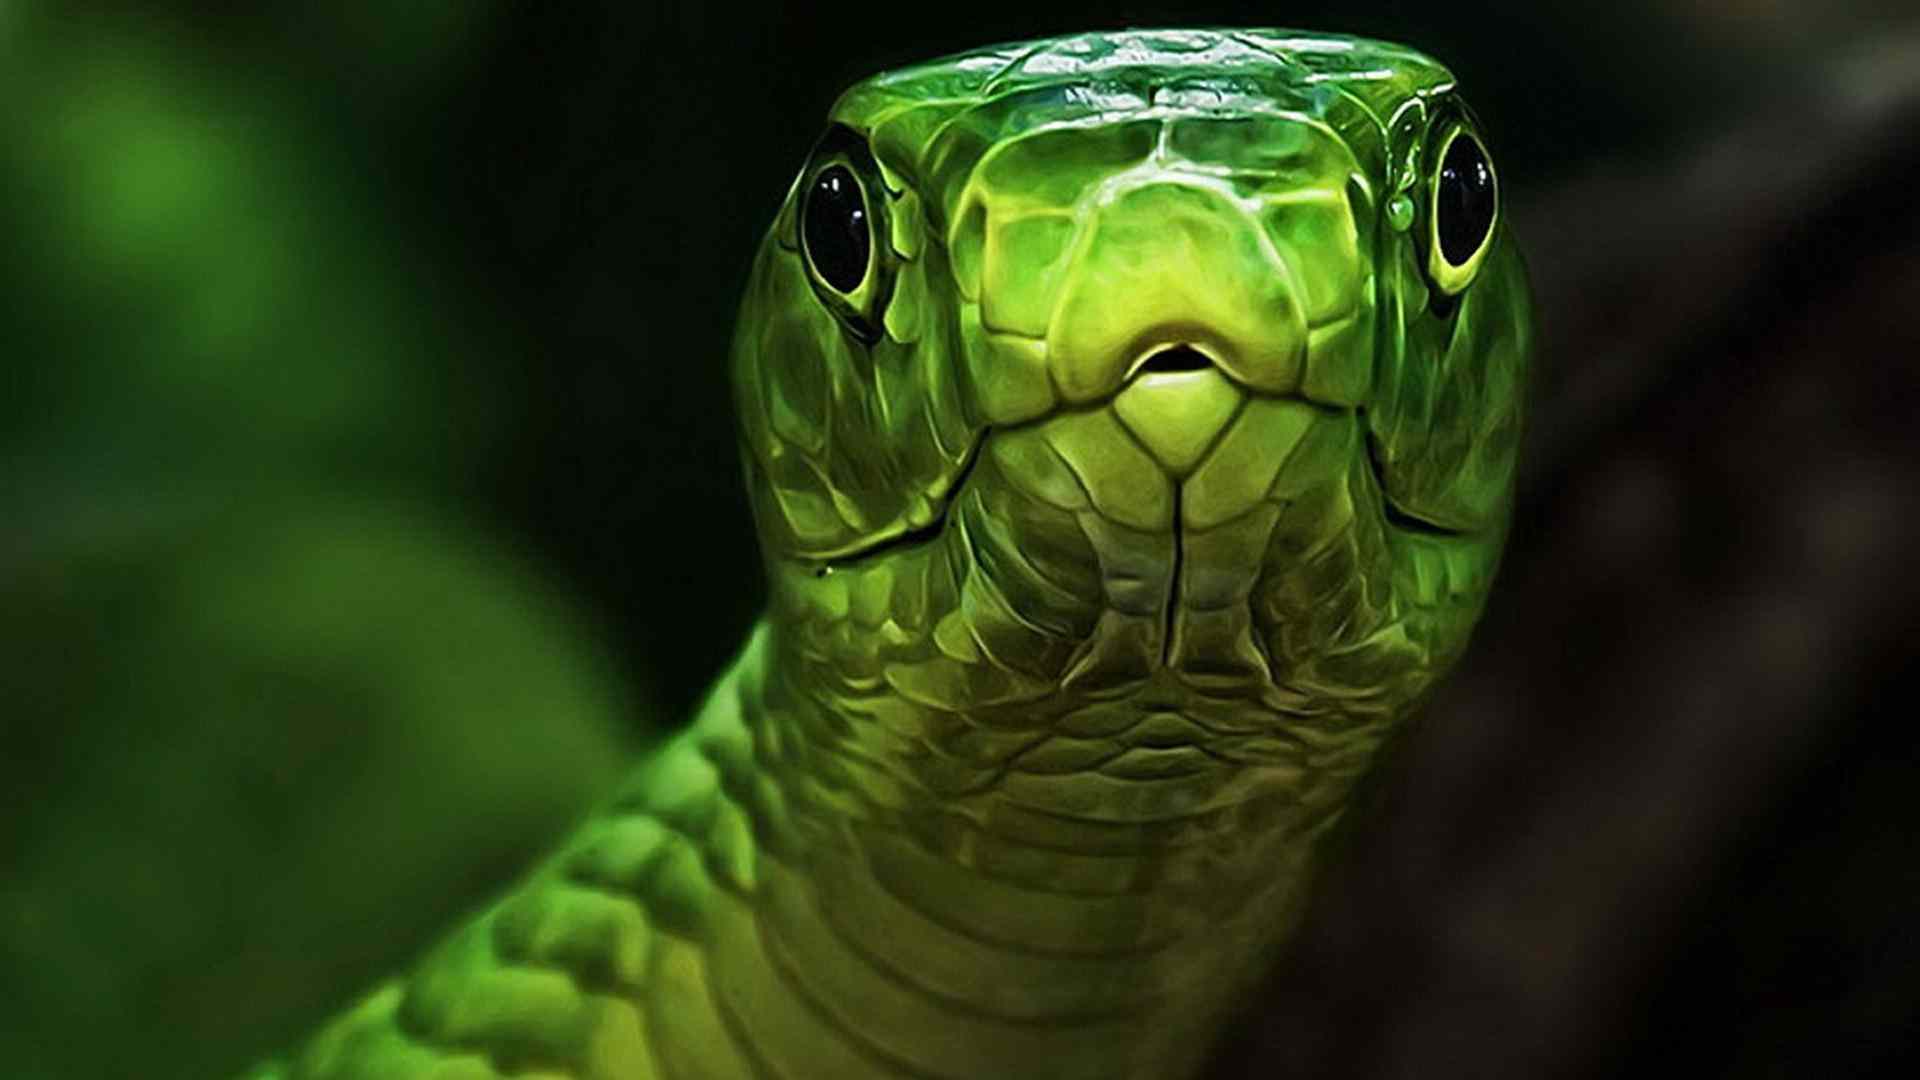 image of an anaconda snake download